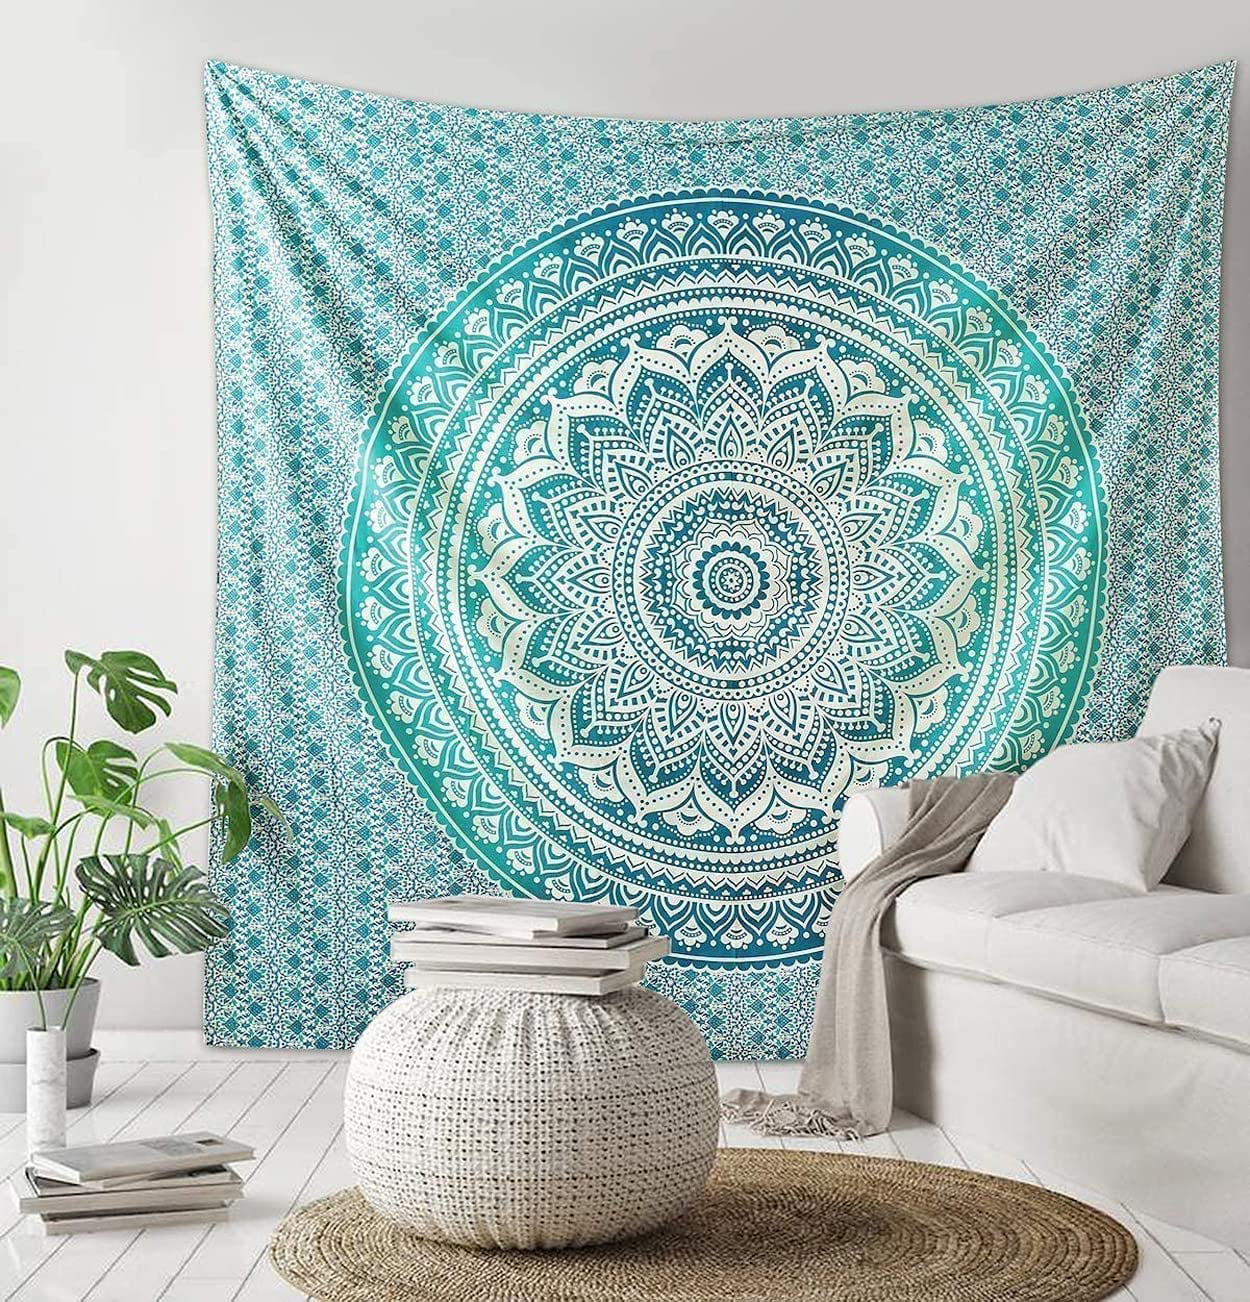 Mandala Tapestry Wall Hanging Bohemian Beach poster Cotton New Blanket Yoga 